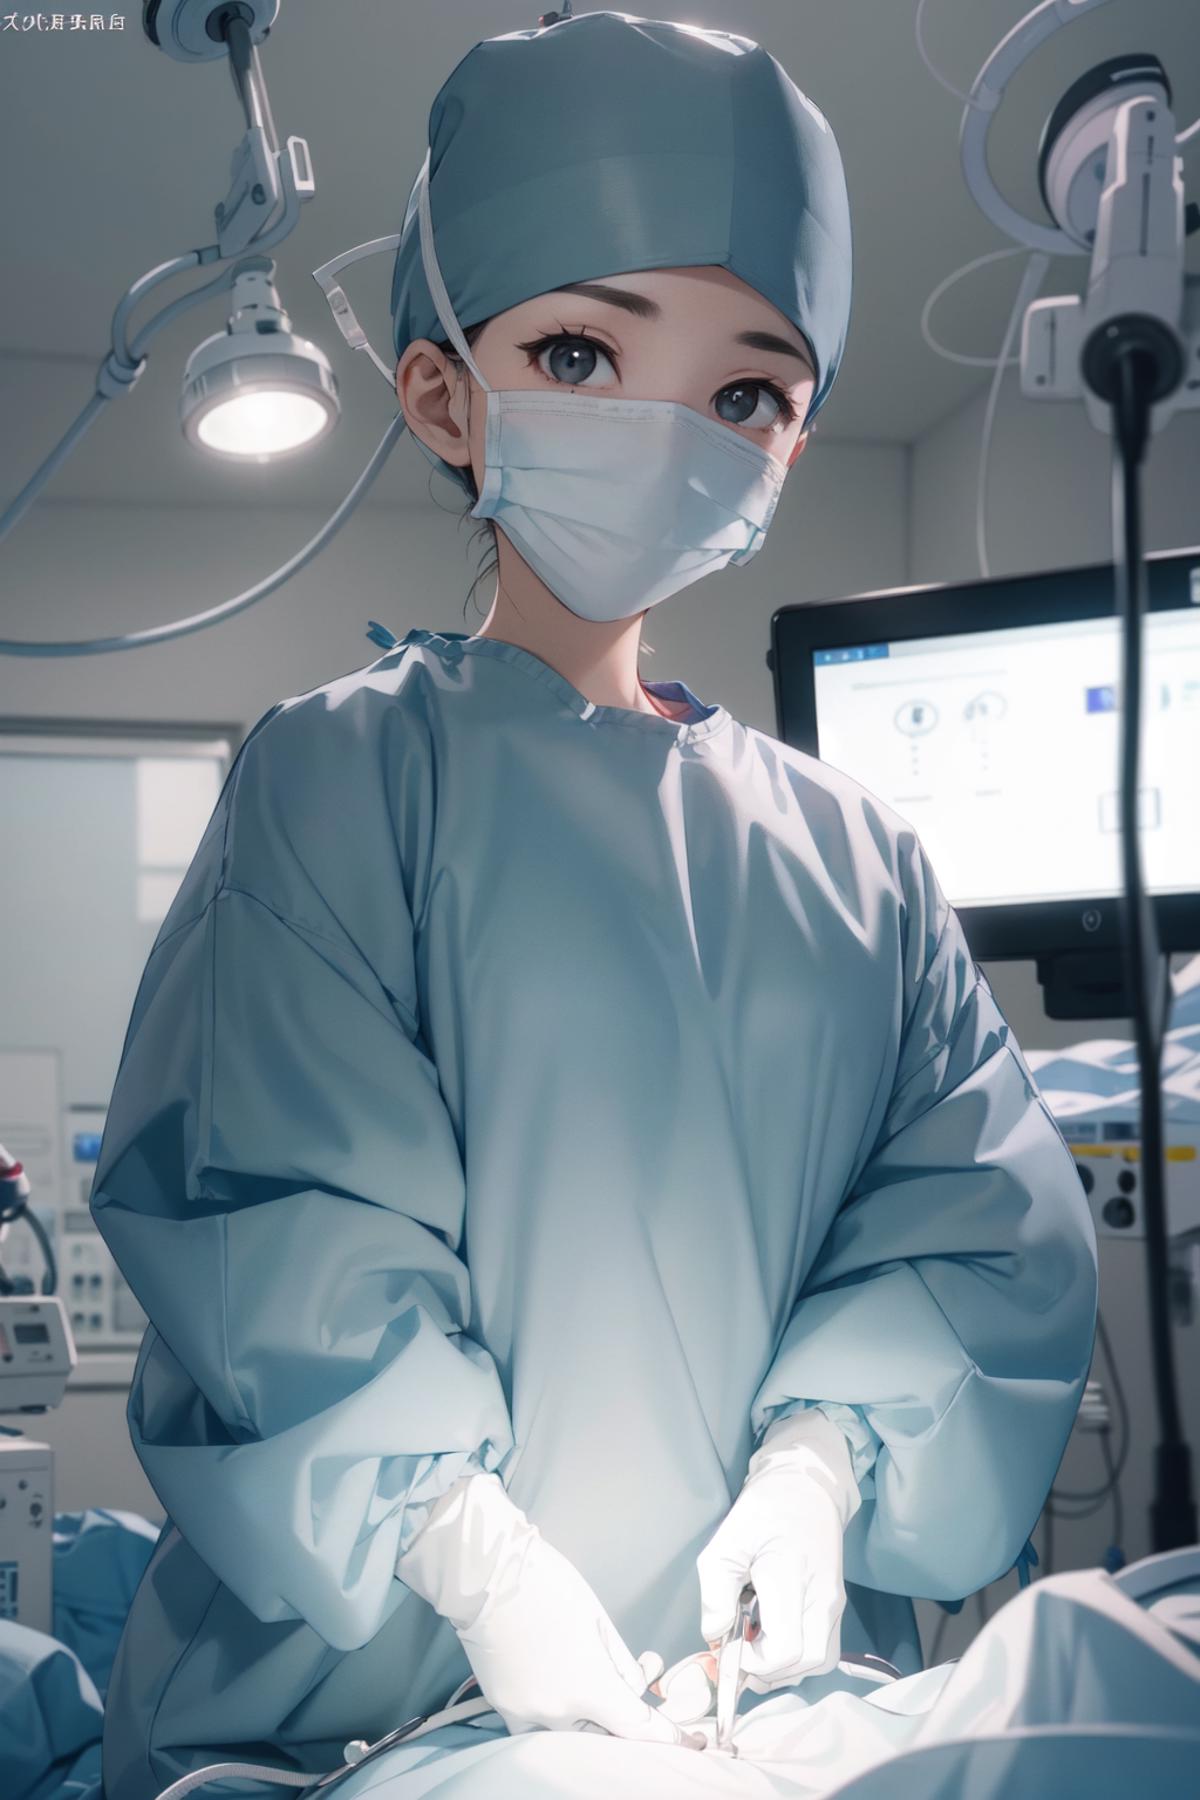 Female Surgeon / Surgical Nurse image by phageoussurgery439